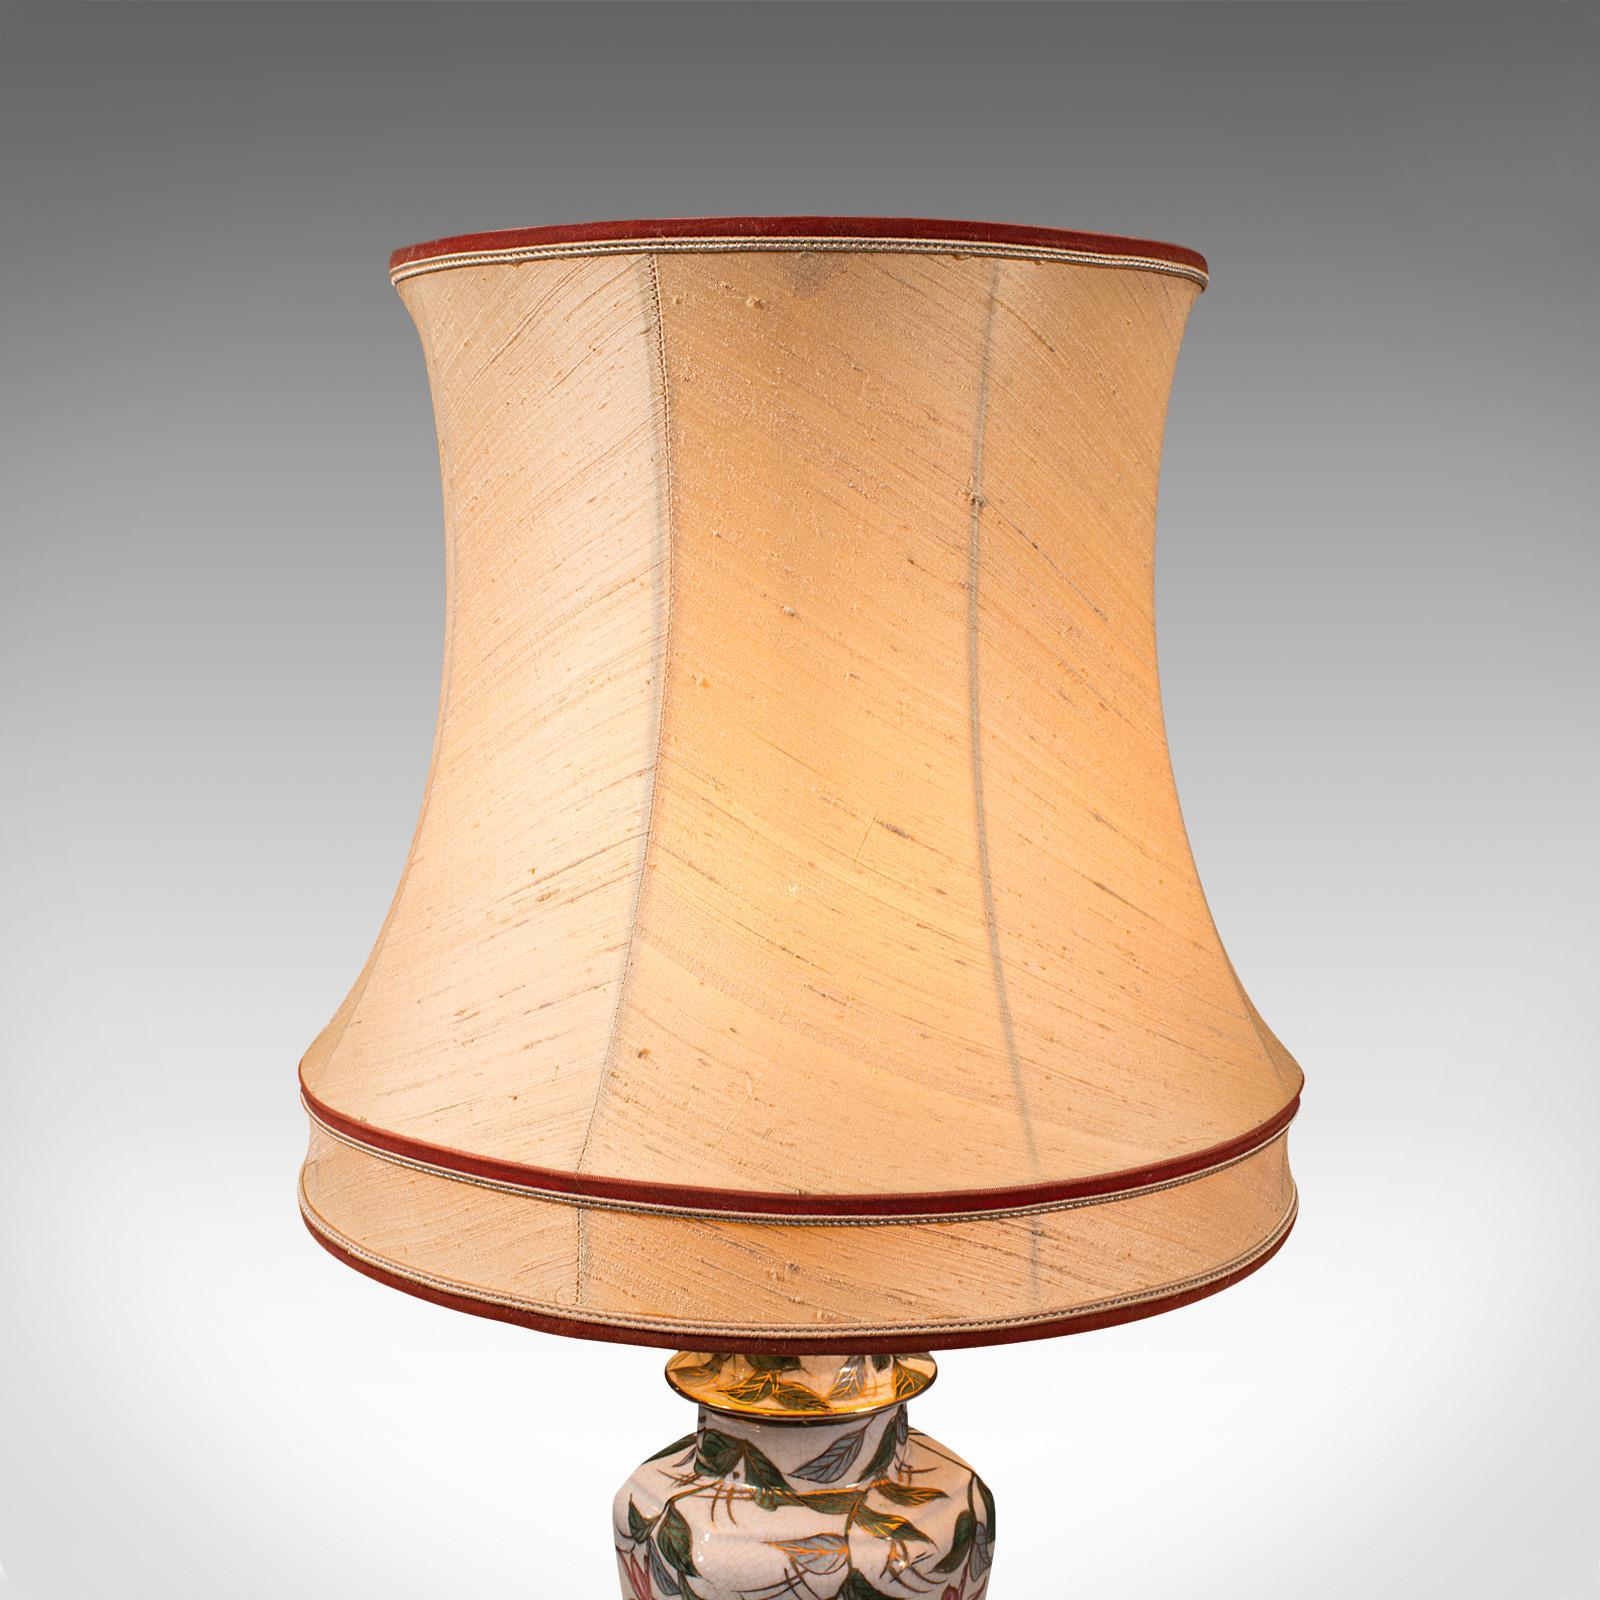 Vintage Table Lamp, Chinese, Ceramic, Decorative Light, Art Deco, Circa 1940 For Sale 3